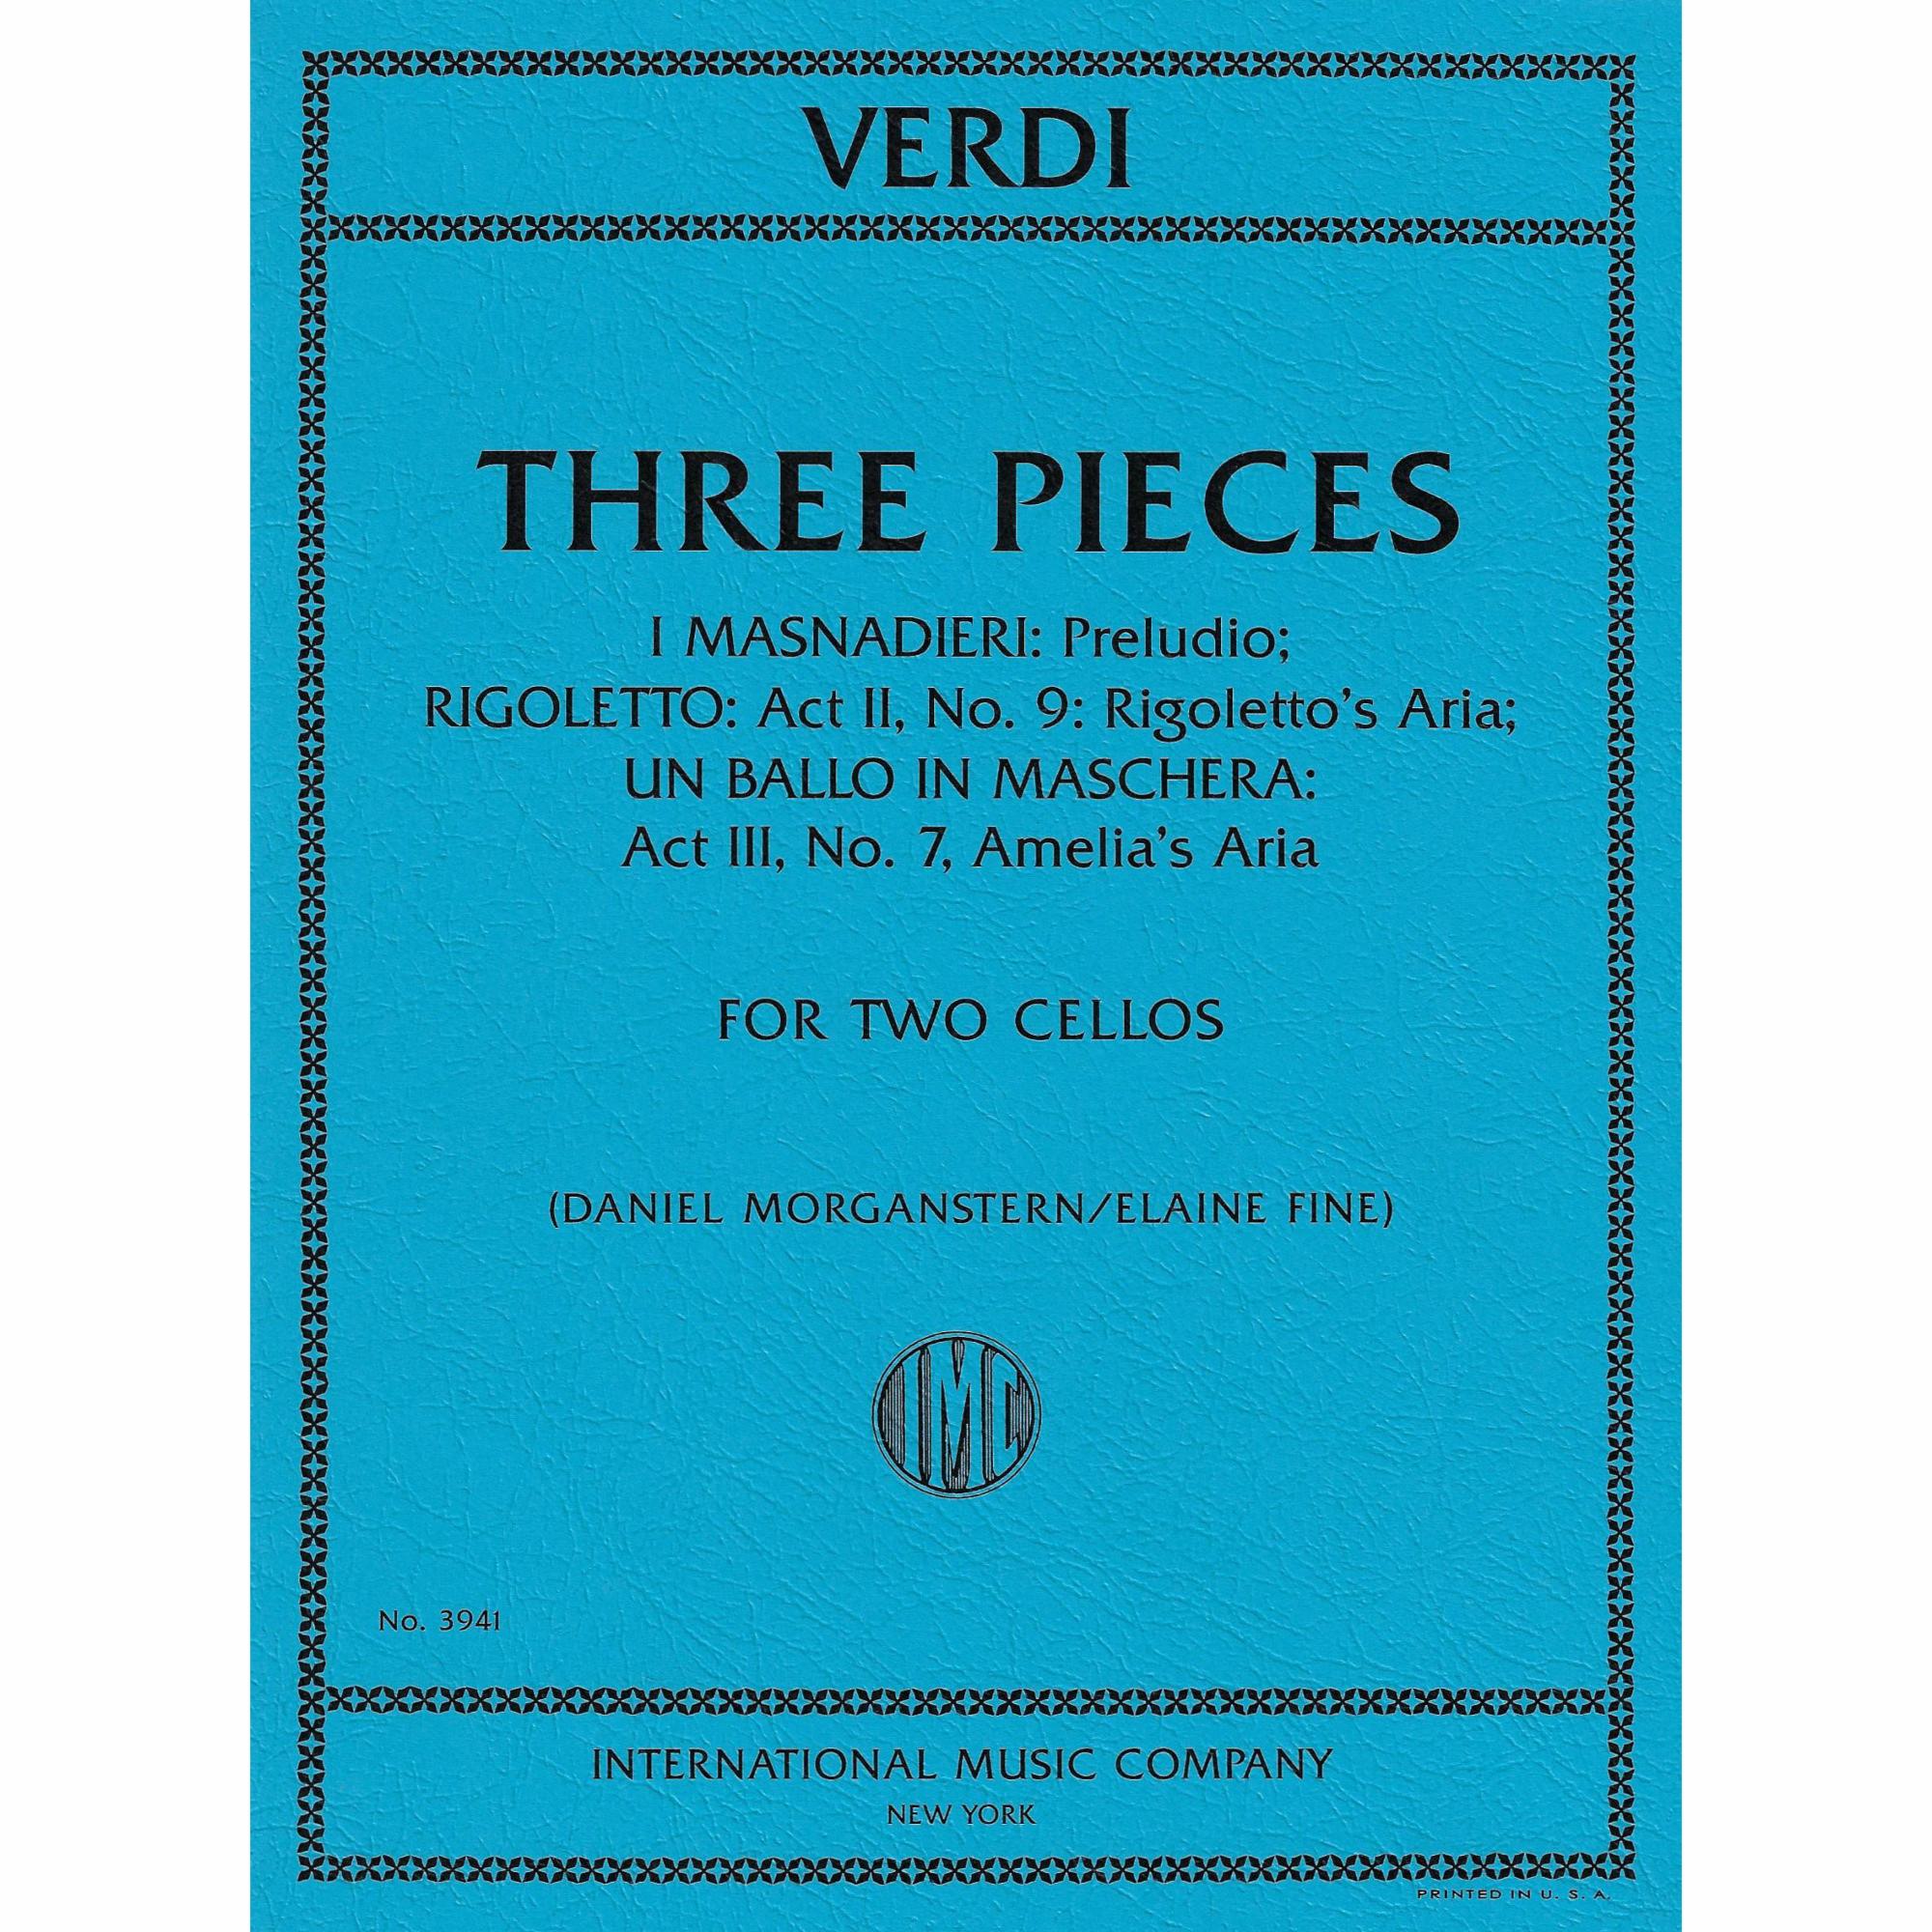 Verdi -- Three Pieces for Two Cellos